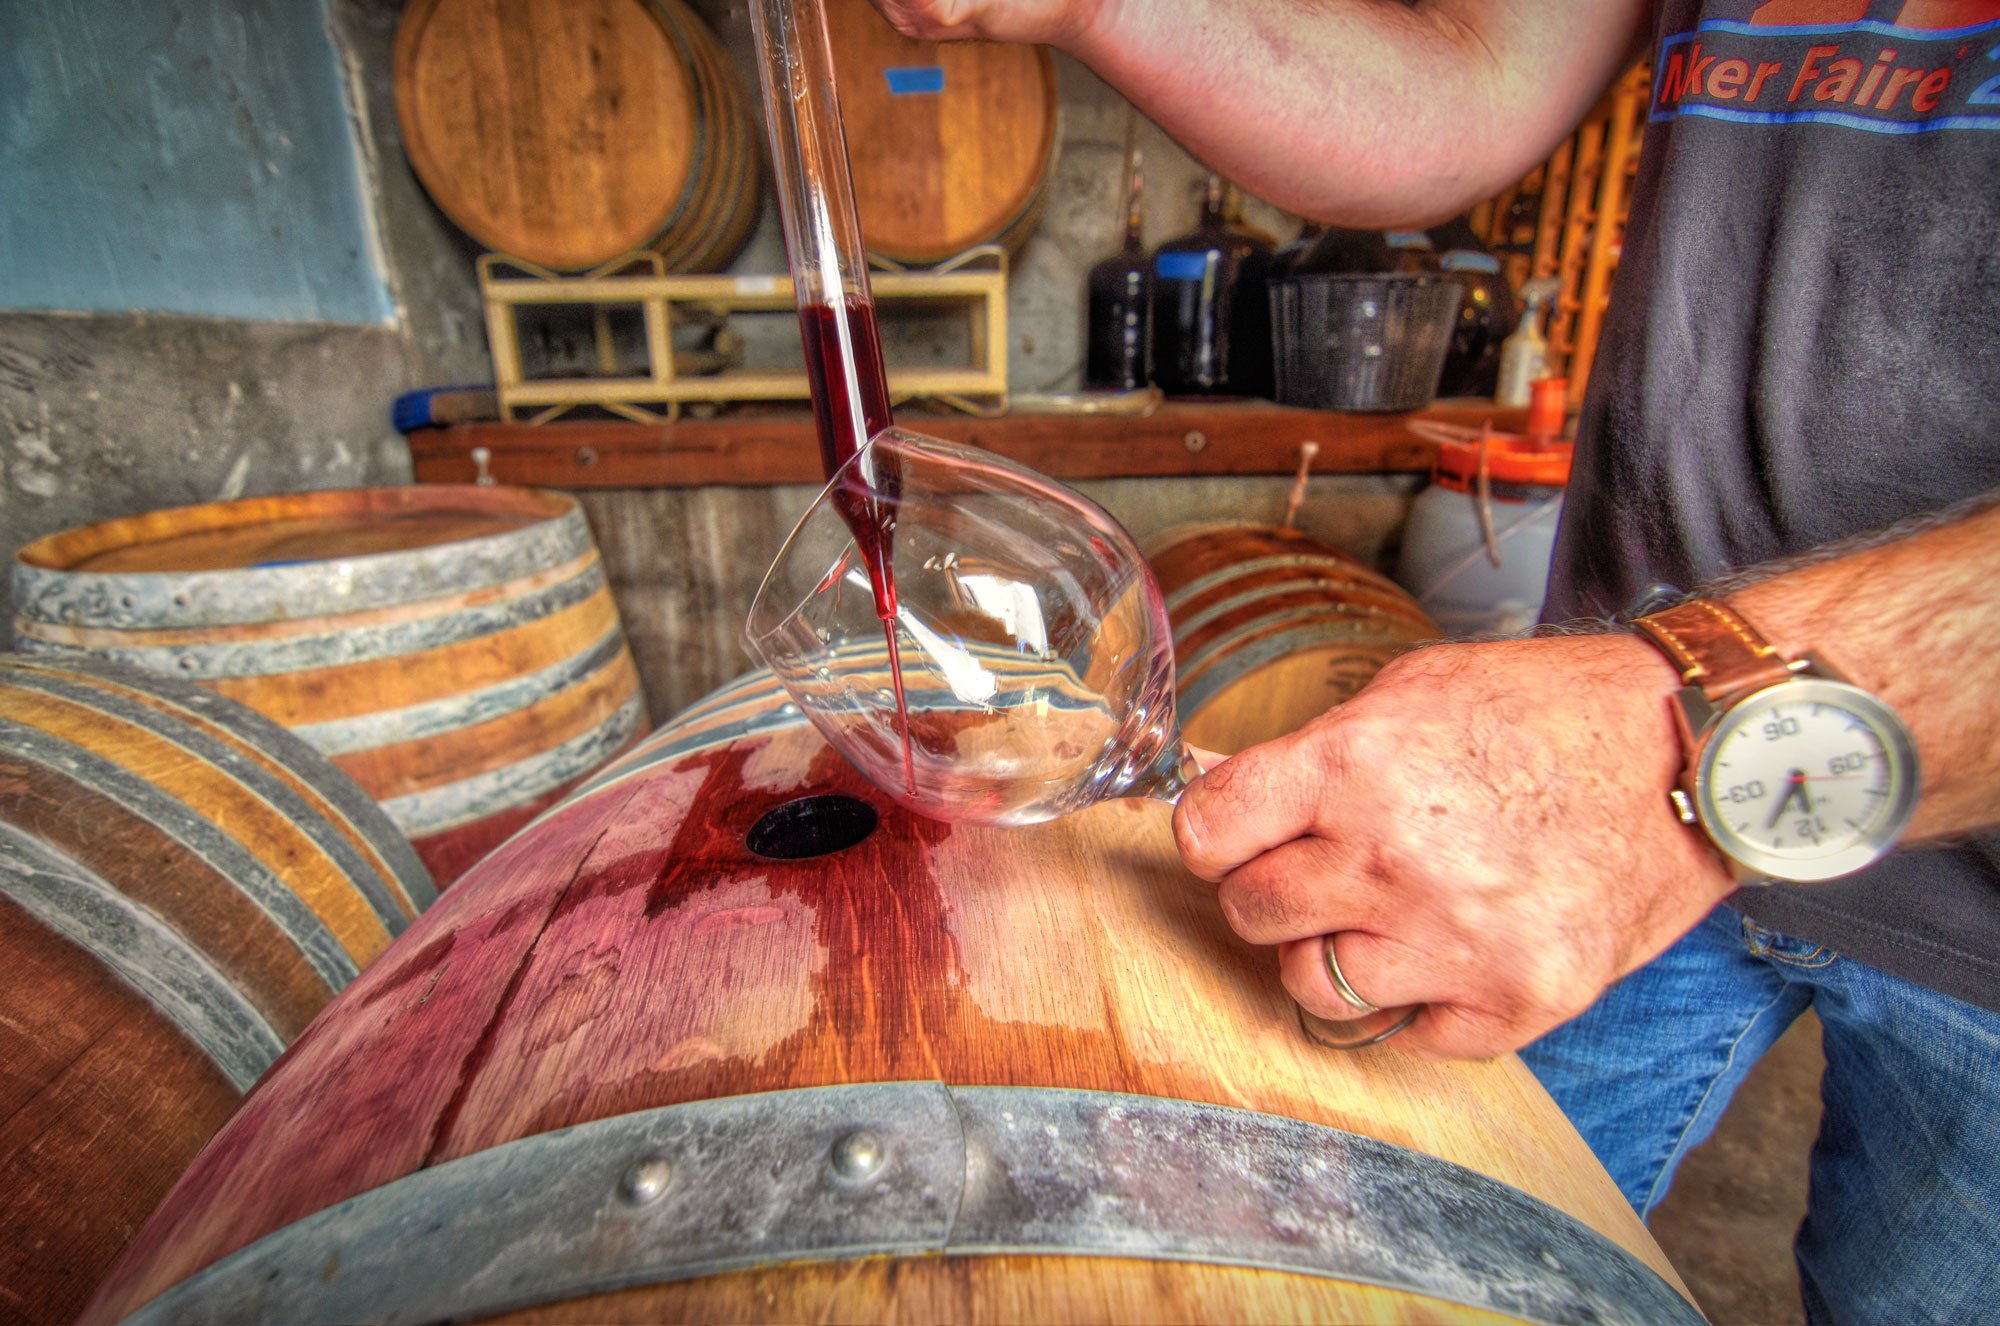 Tasting wine from barrel